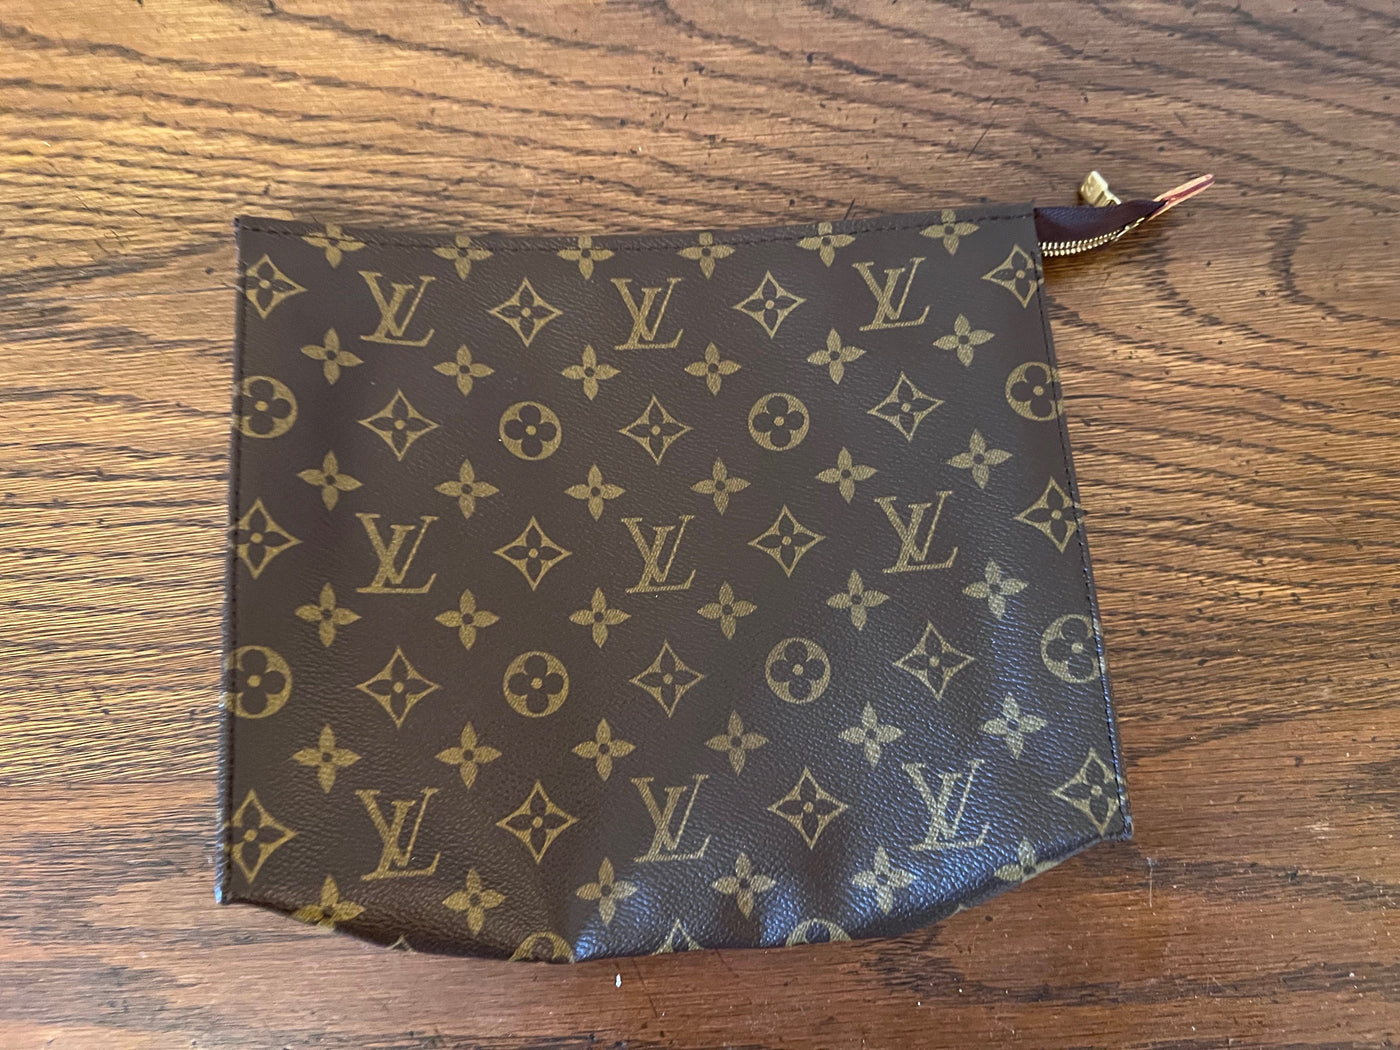 Louis Vuitton Small Makeup Bag – The Stock Room NJ